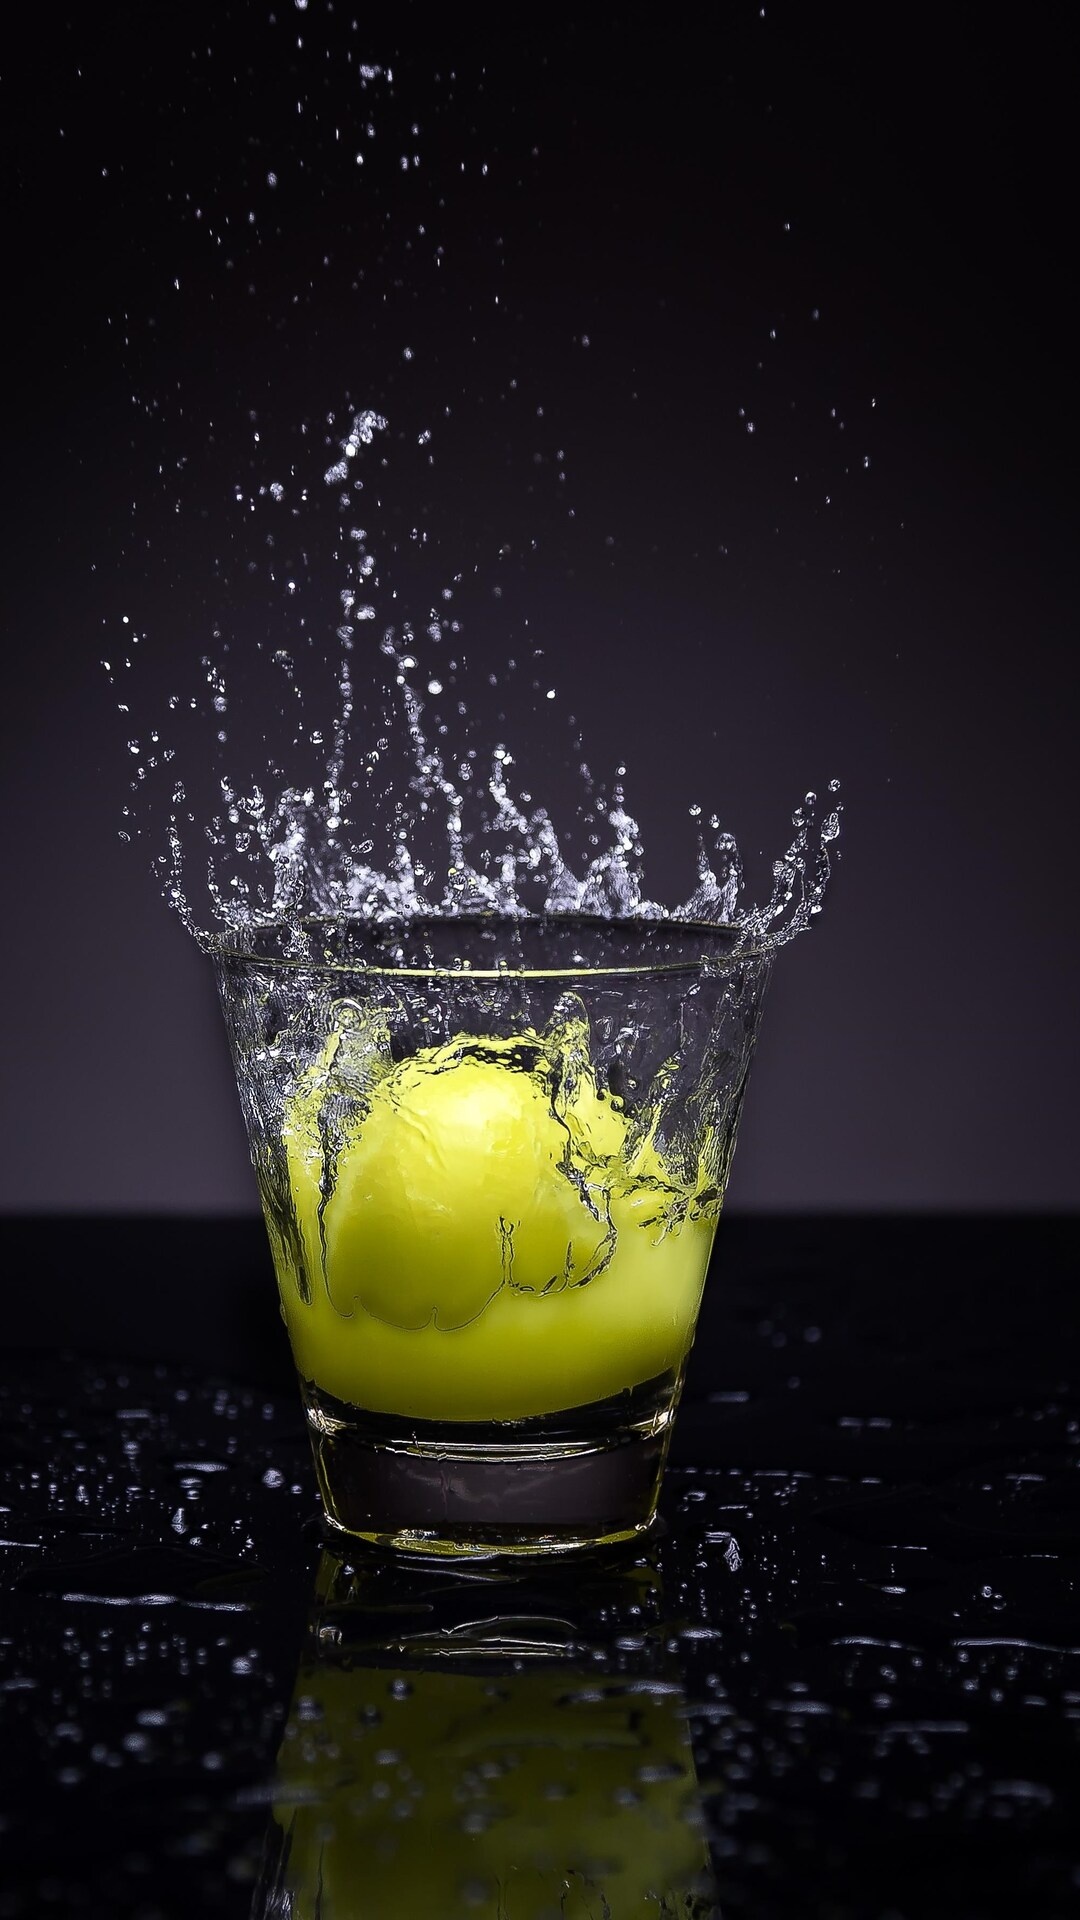 Lemon: Lemonade, A sweetened lemon-flavored juice. 1080x1920 Full HD Wallpaper.